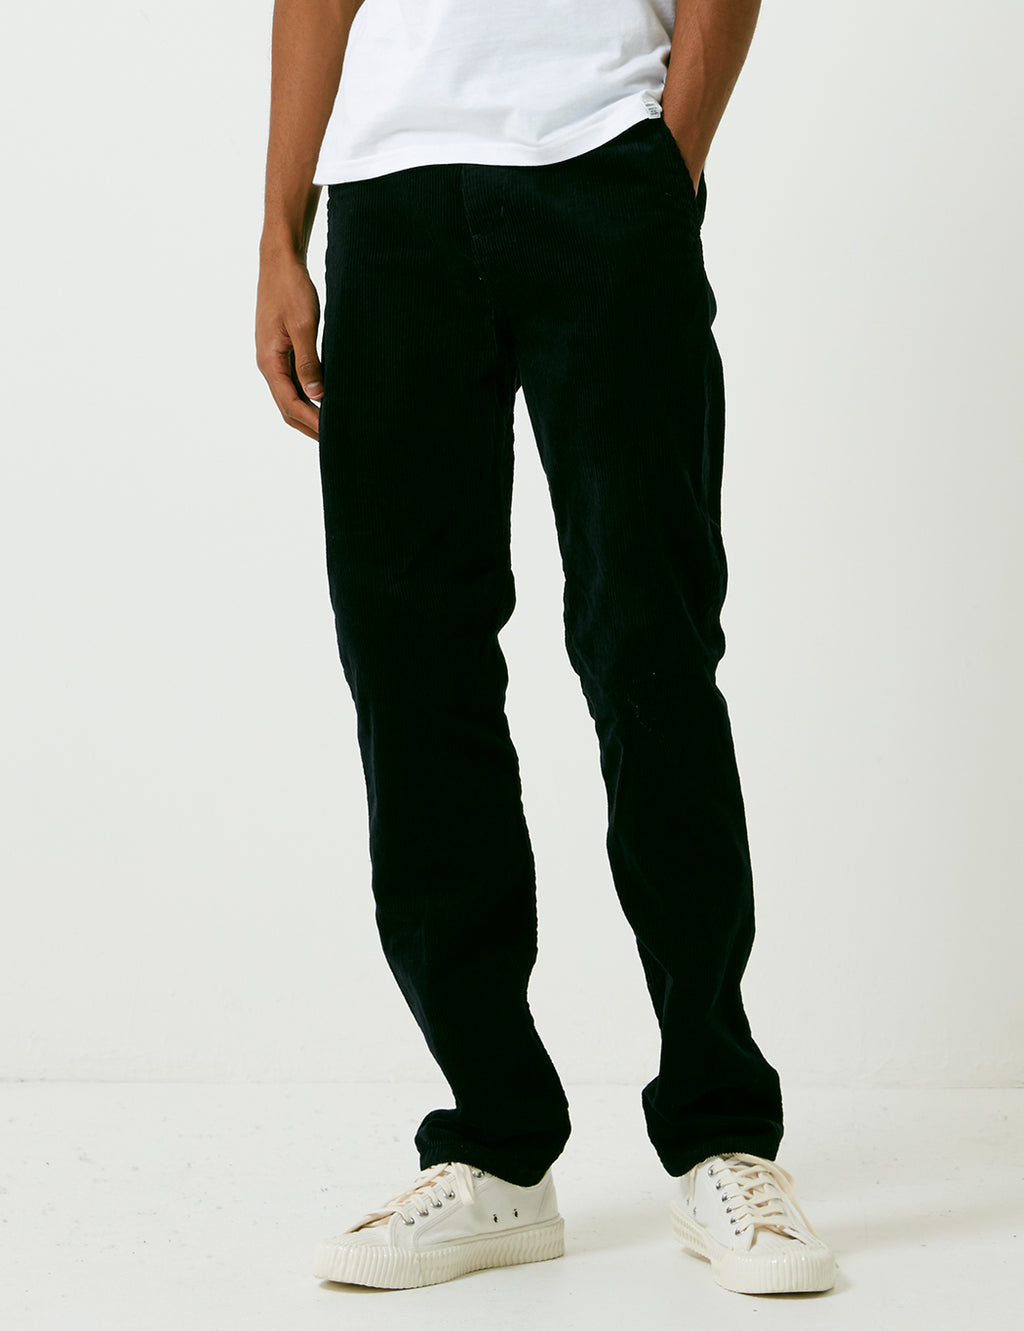 Carhartt Club Pant Trousers (Corduroy) - Loden Green | URBAN EXCESS.